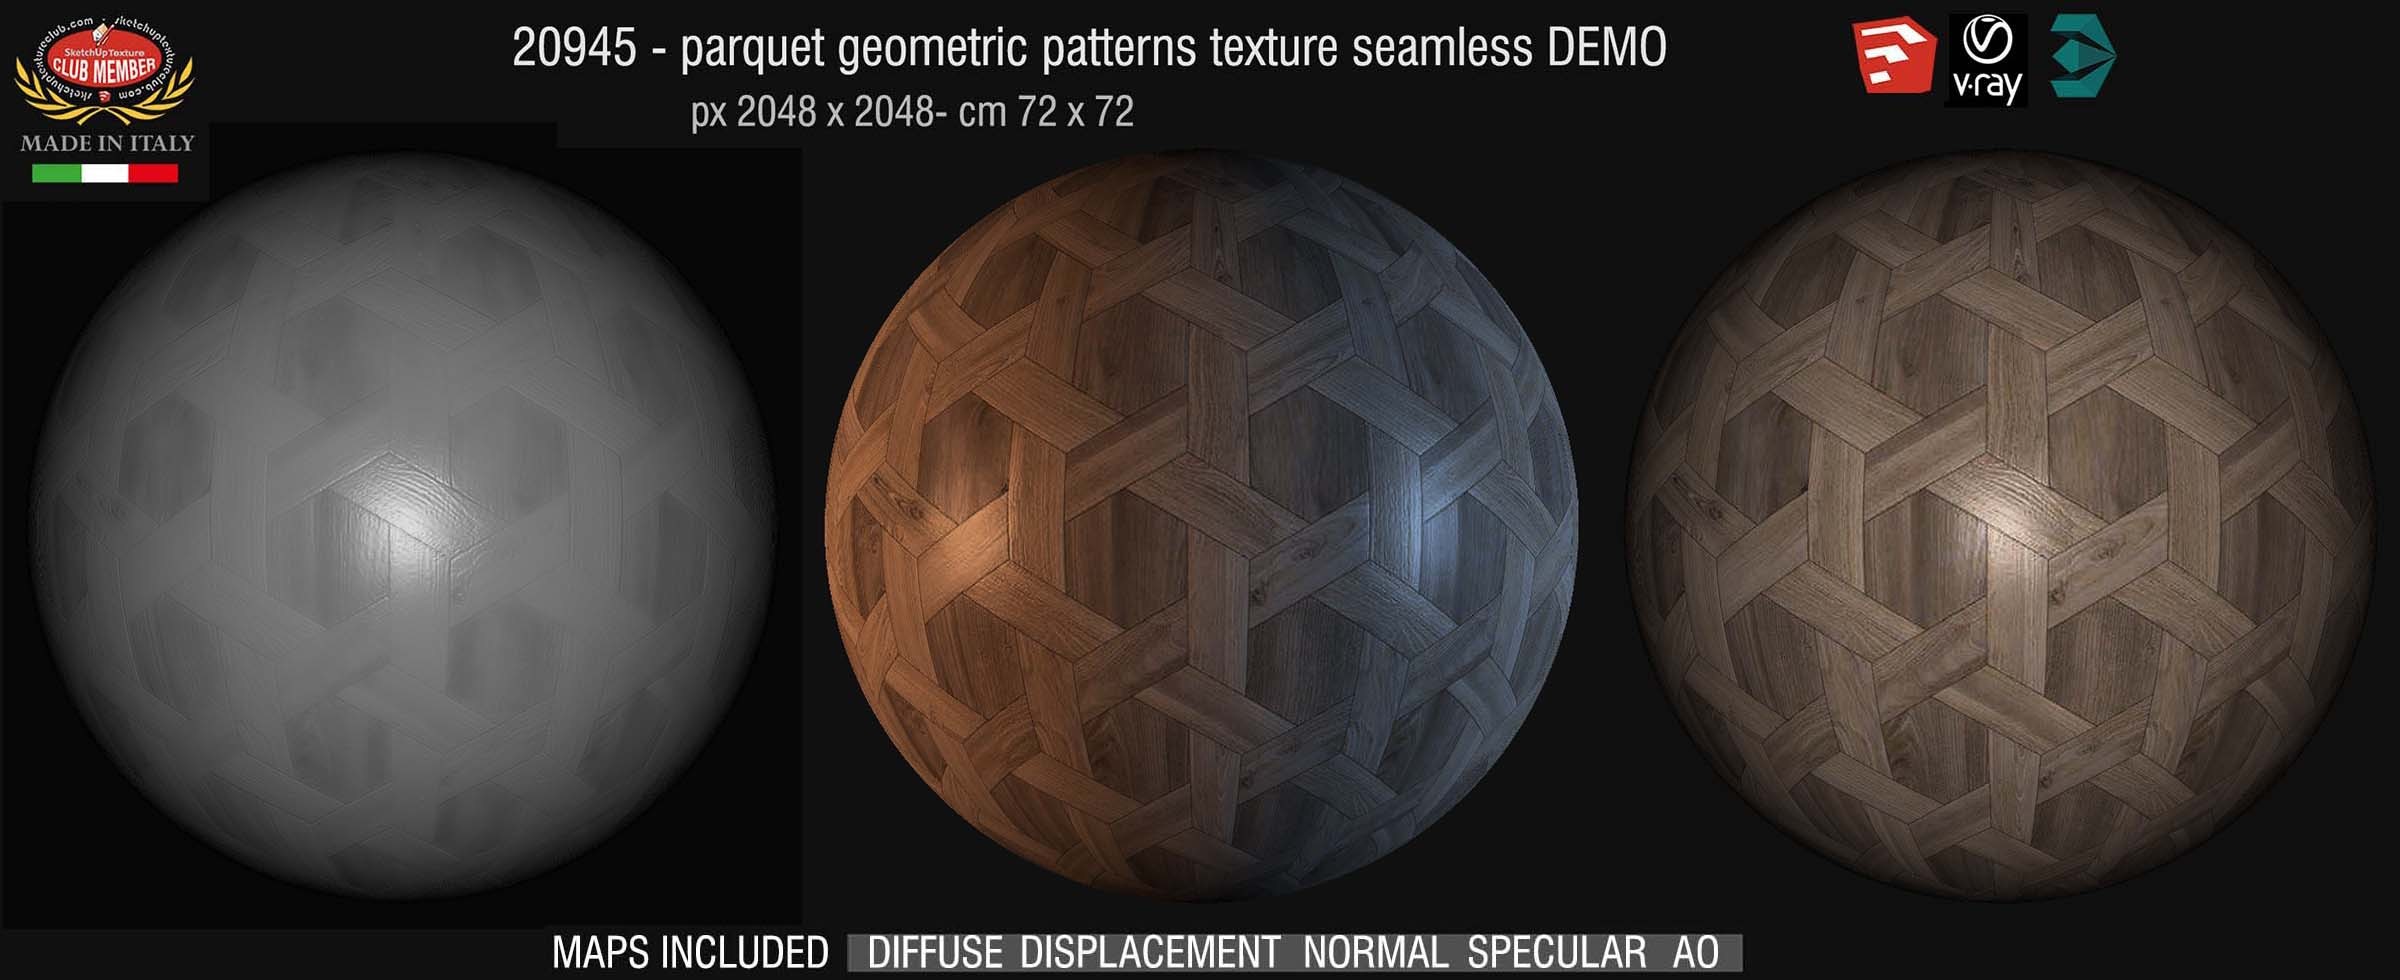 20945 Parquet geometric patterns texture + maps DEMO